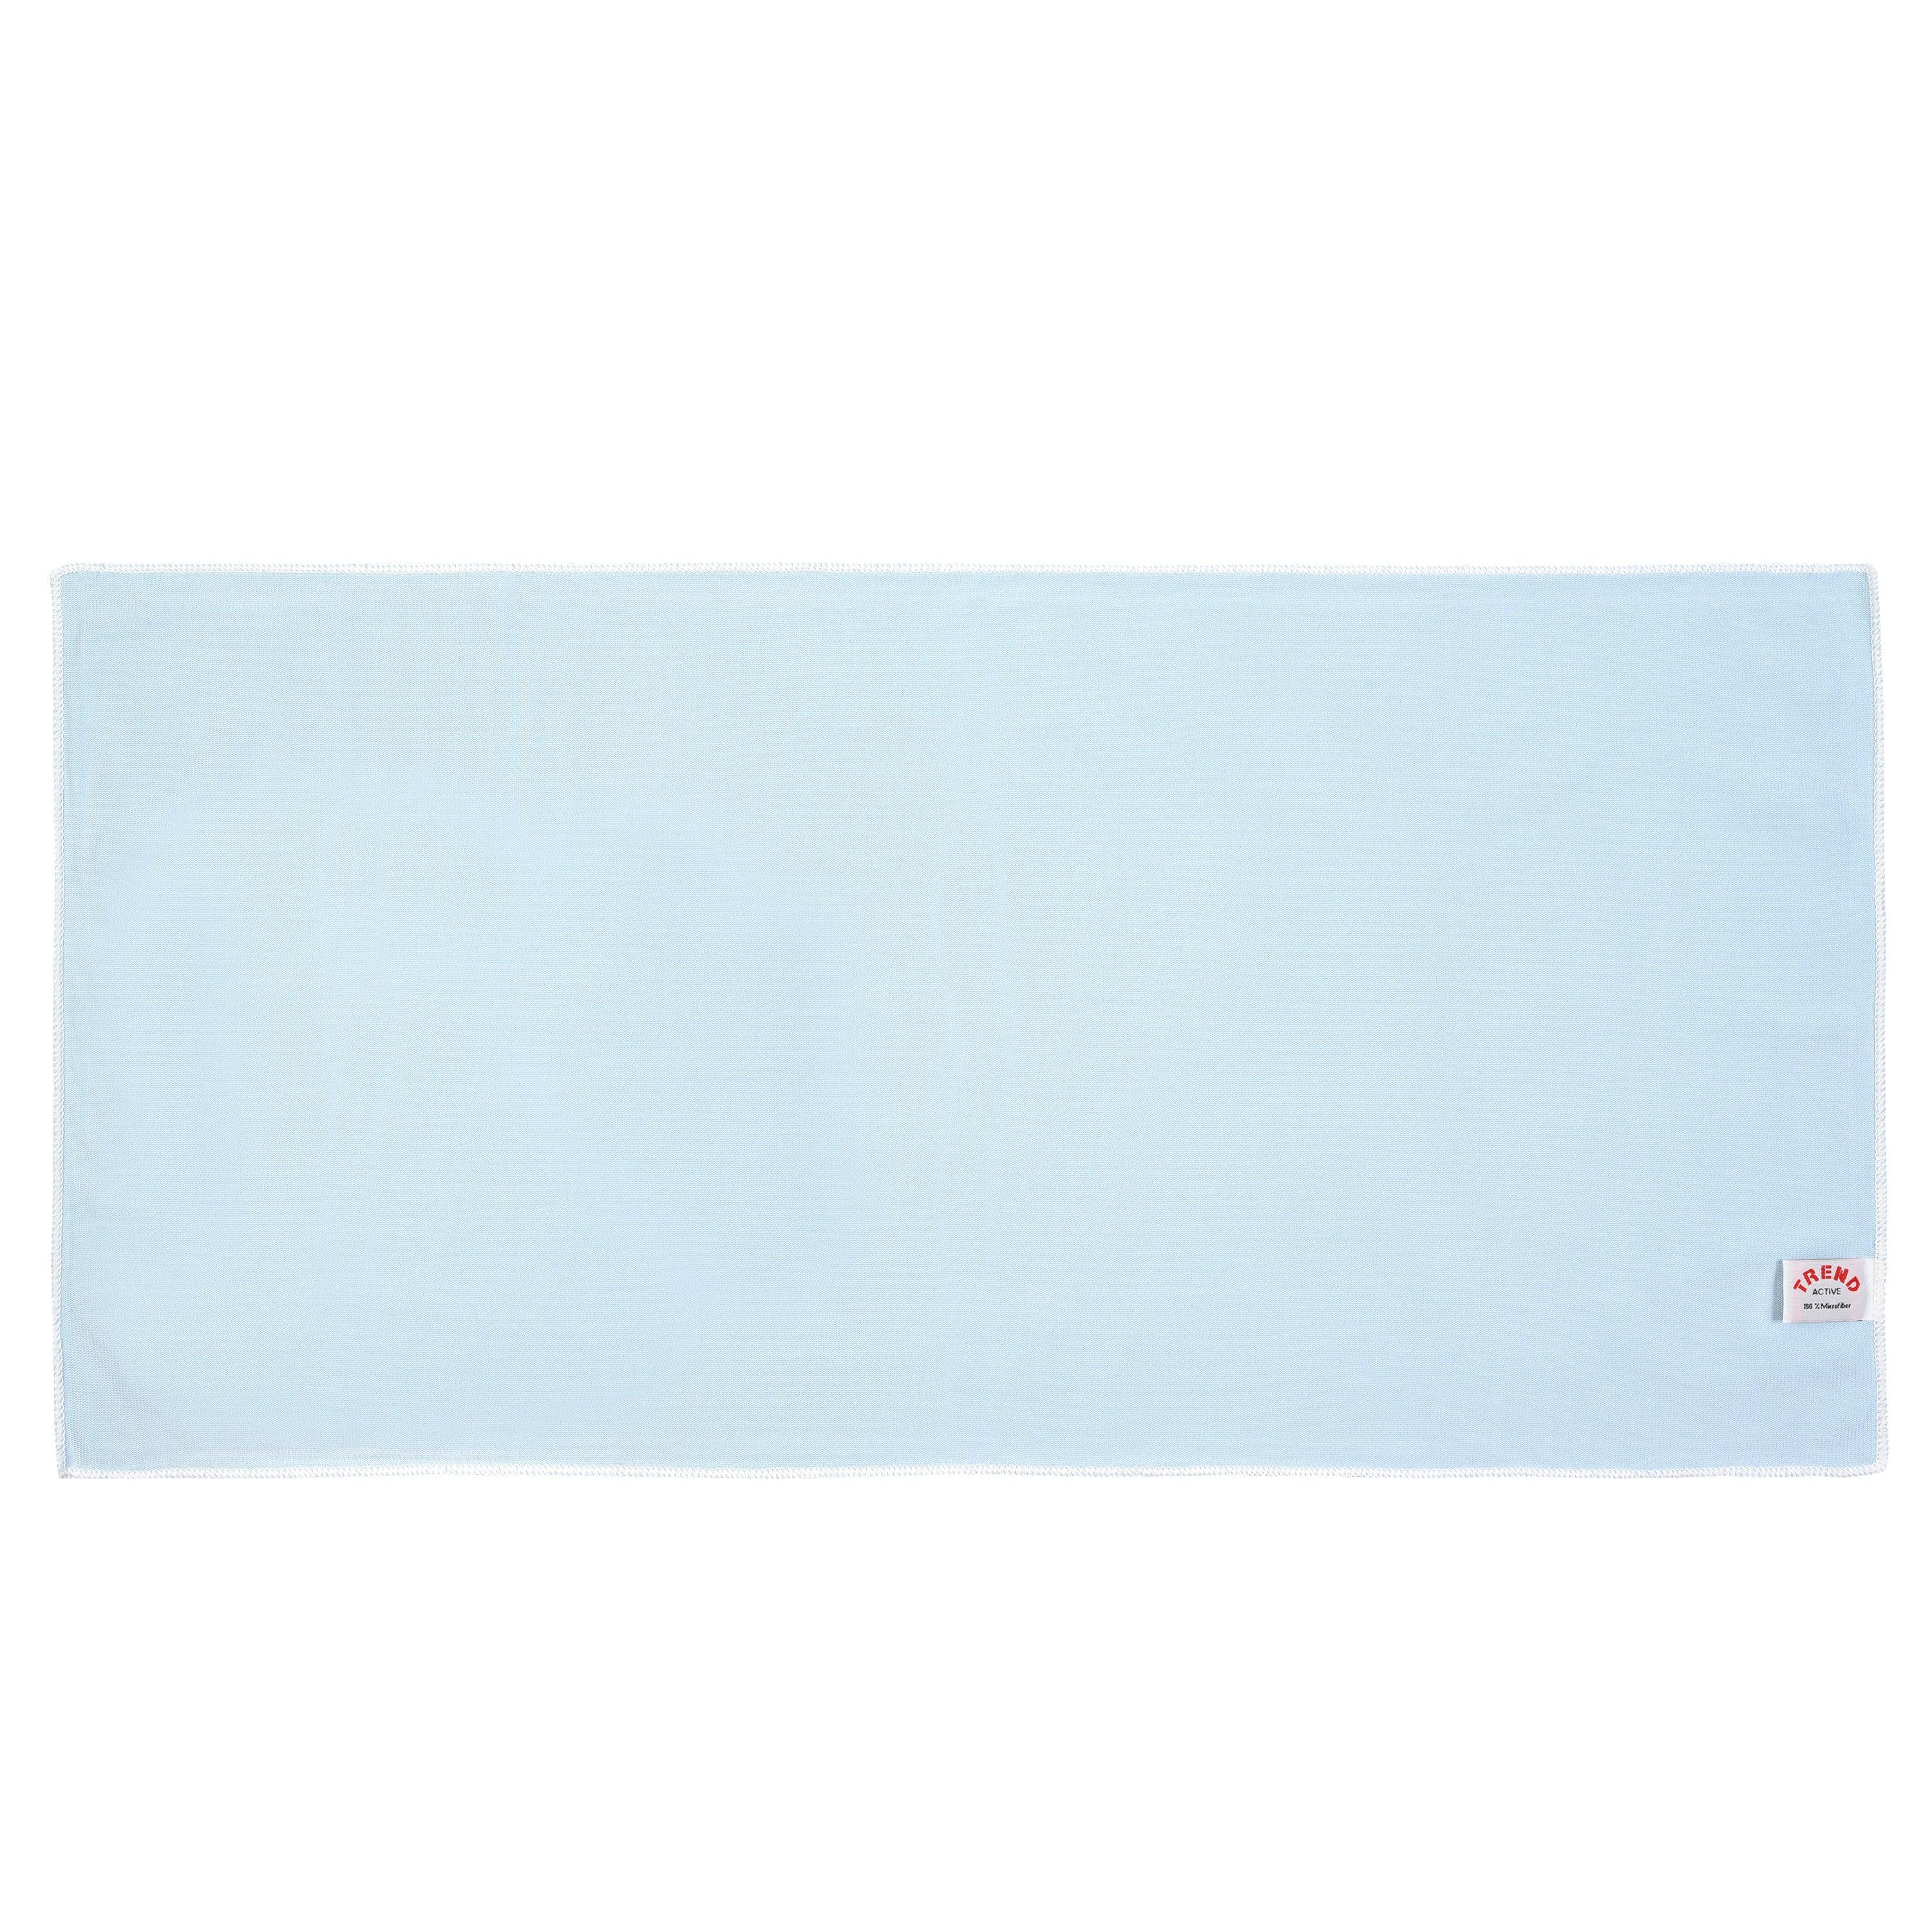 TREND Active Manufaktur Fenstertuch blau gross 35 x 70 cm - TREND Products AT